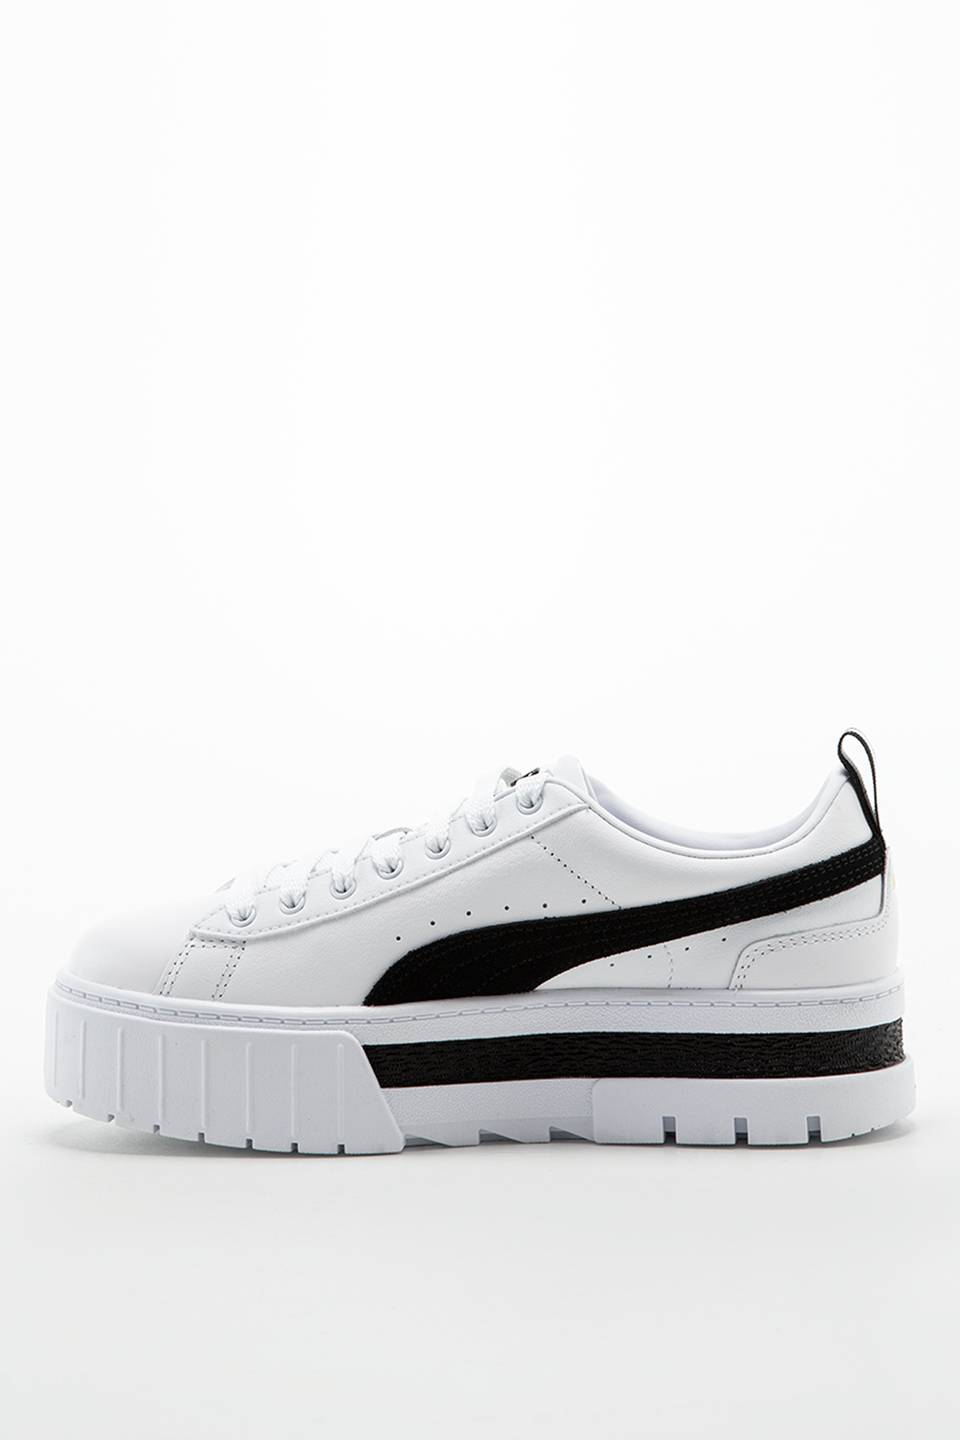 Sneakers Puma Mayze Lth Wn s  White- Black 38198301